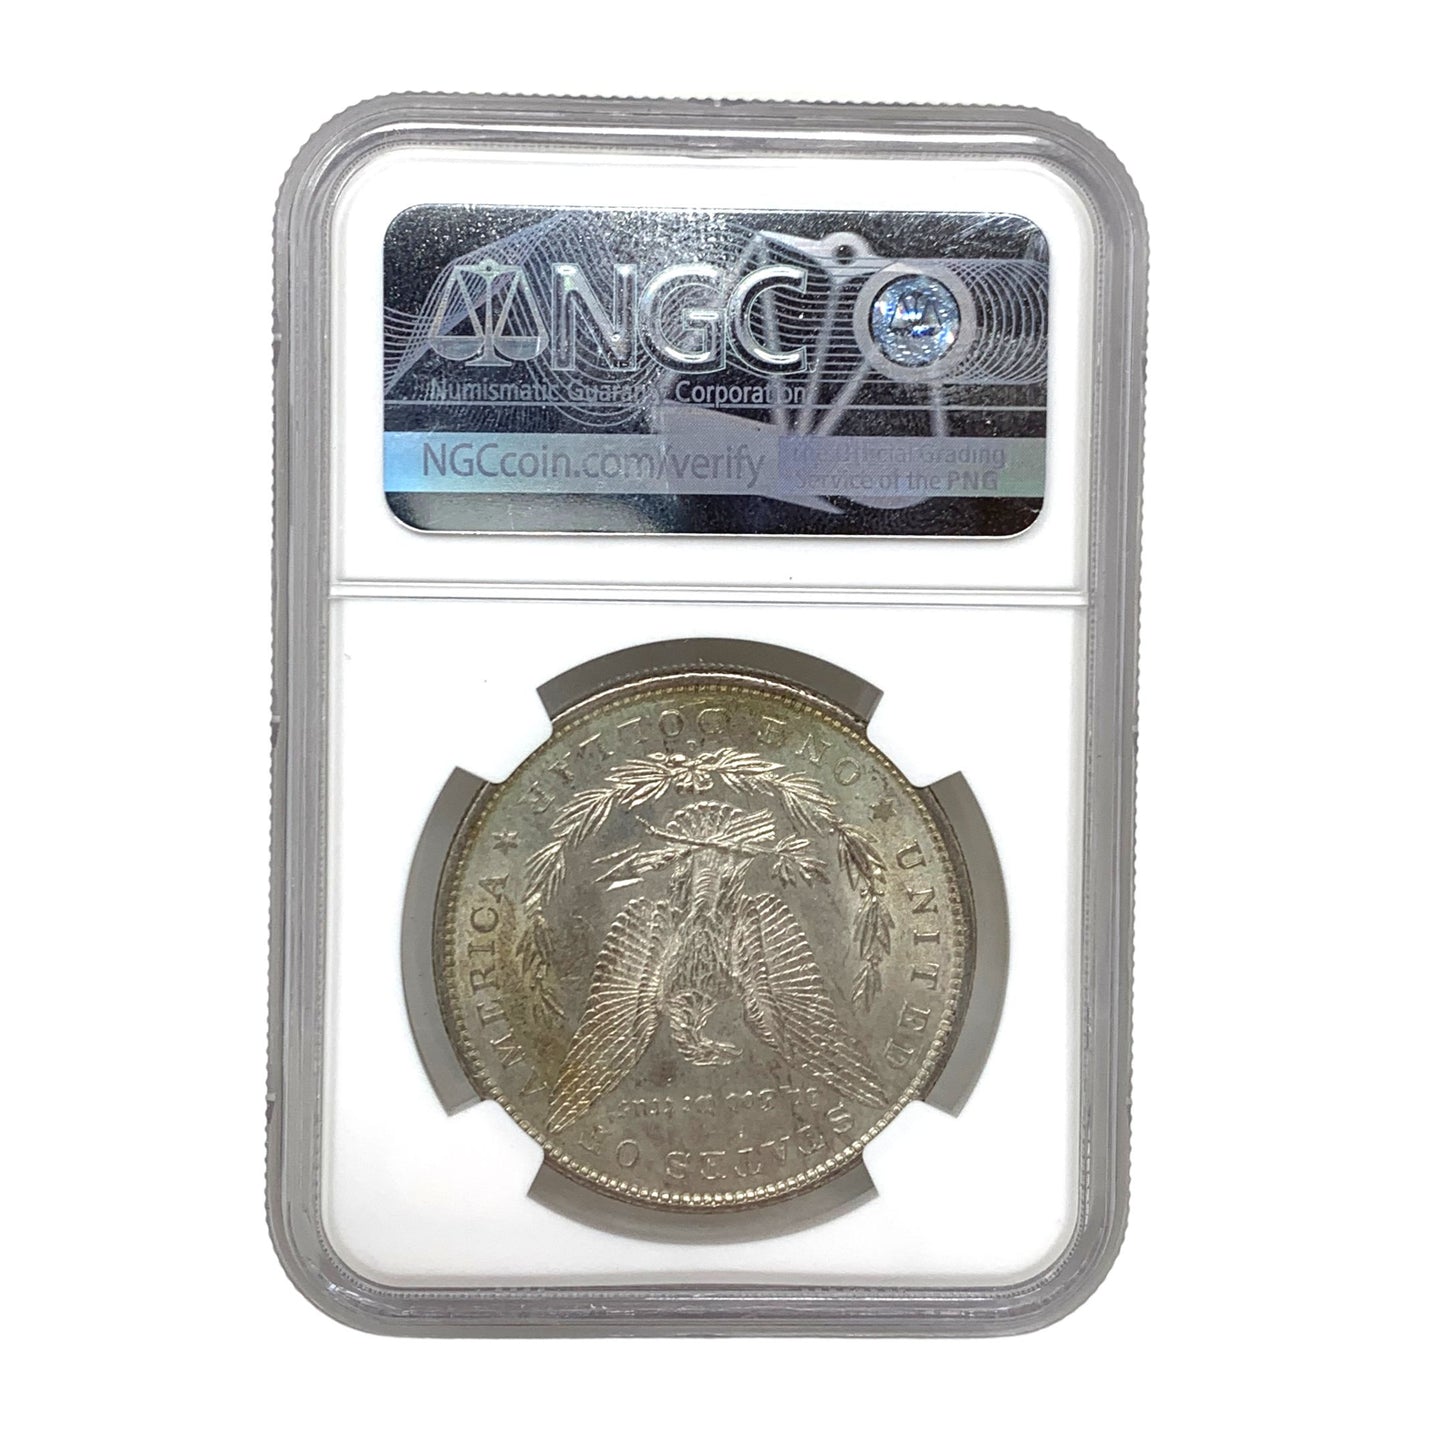 1880-O NGC MS61 Morgan Silver Dollar